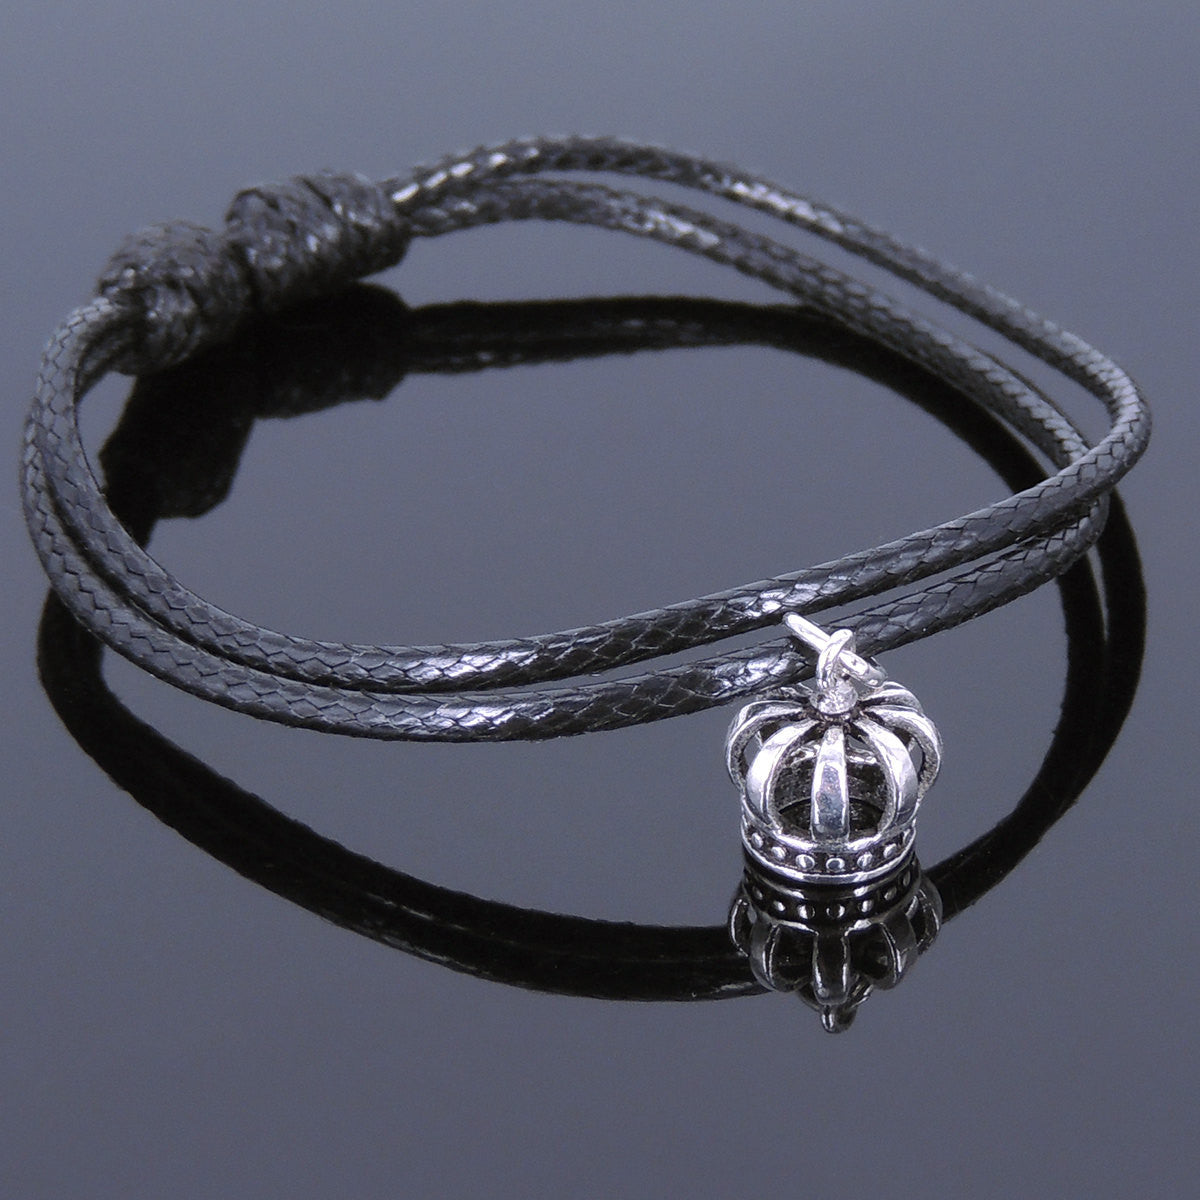 Adjustable Wax Rope Bracelet with S925 Sterling Silver Vintage Crown Pendant - Handmade by Gem & Silver BR526